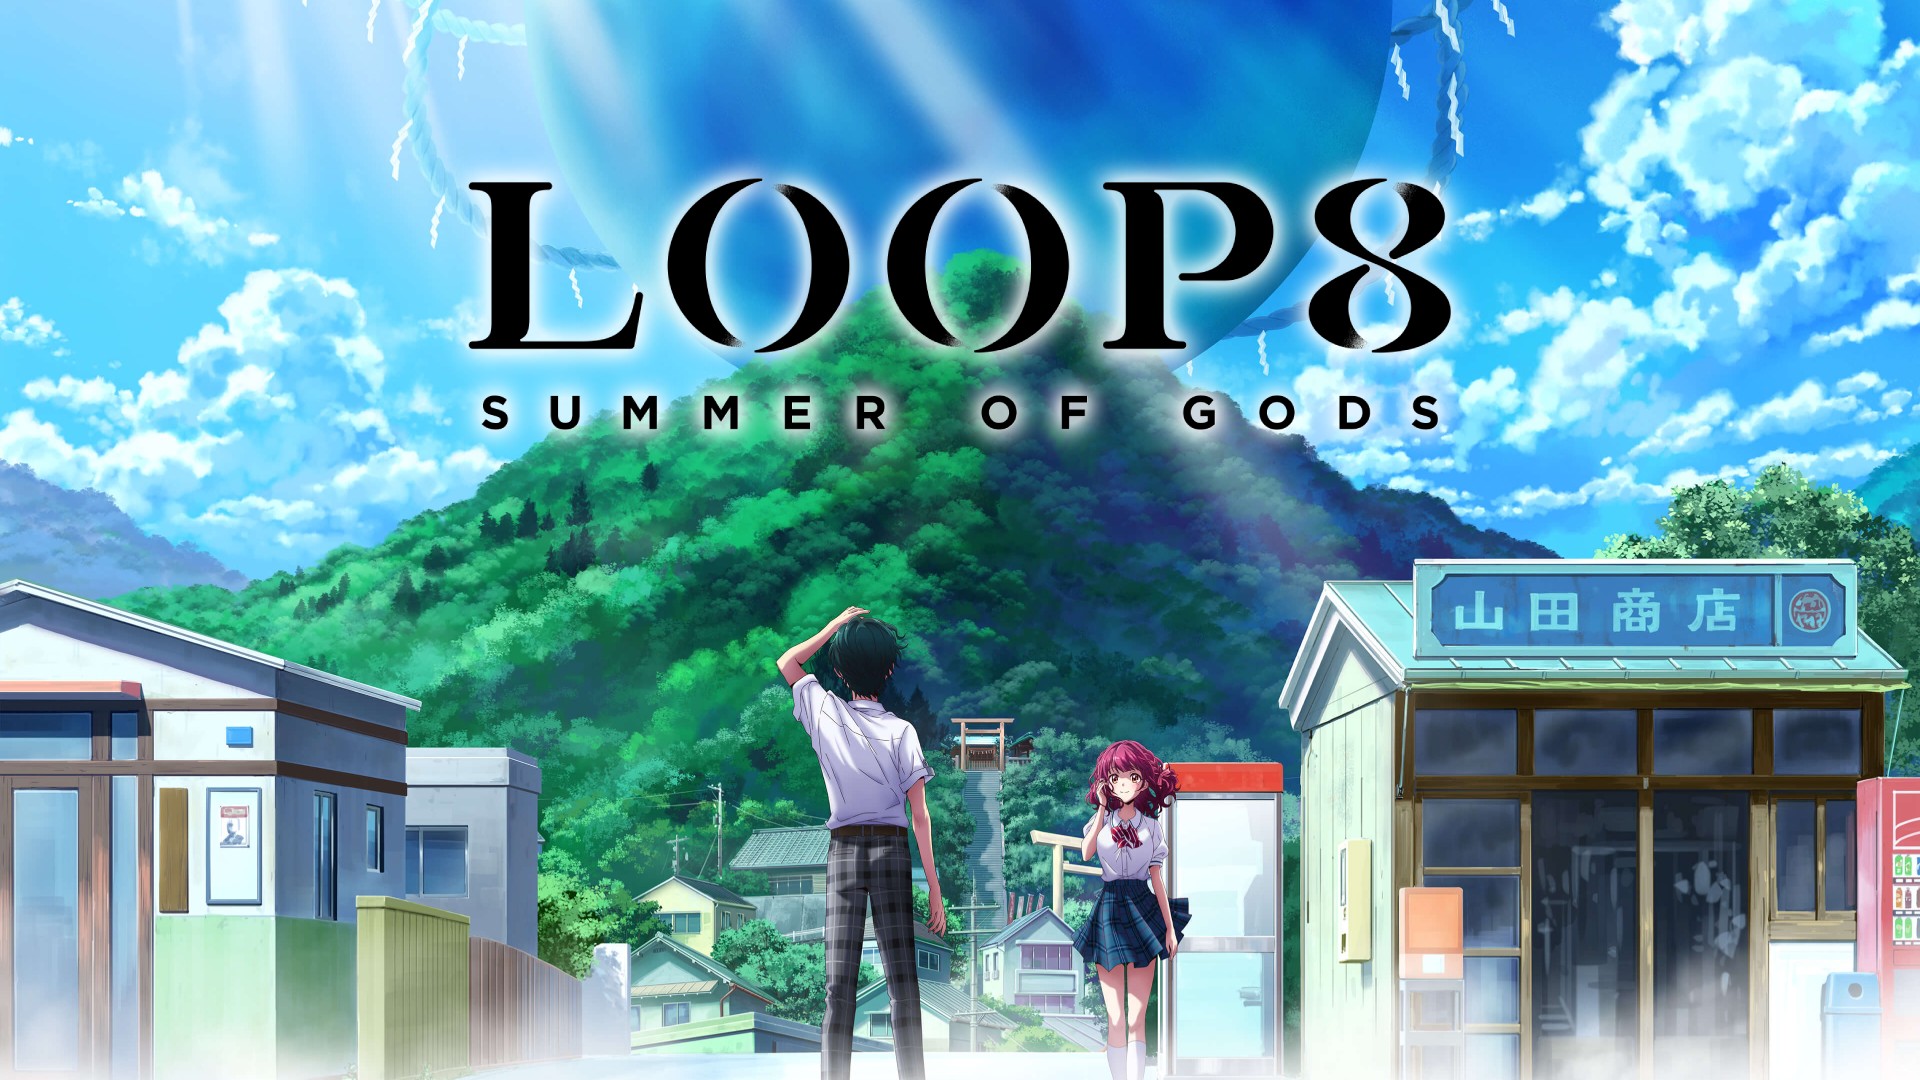 Loop8 - Summer of Gods